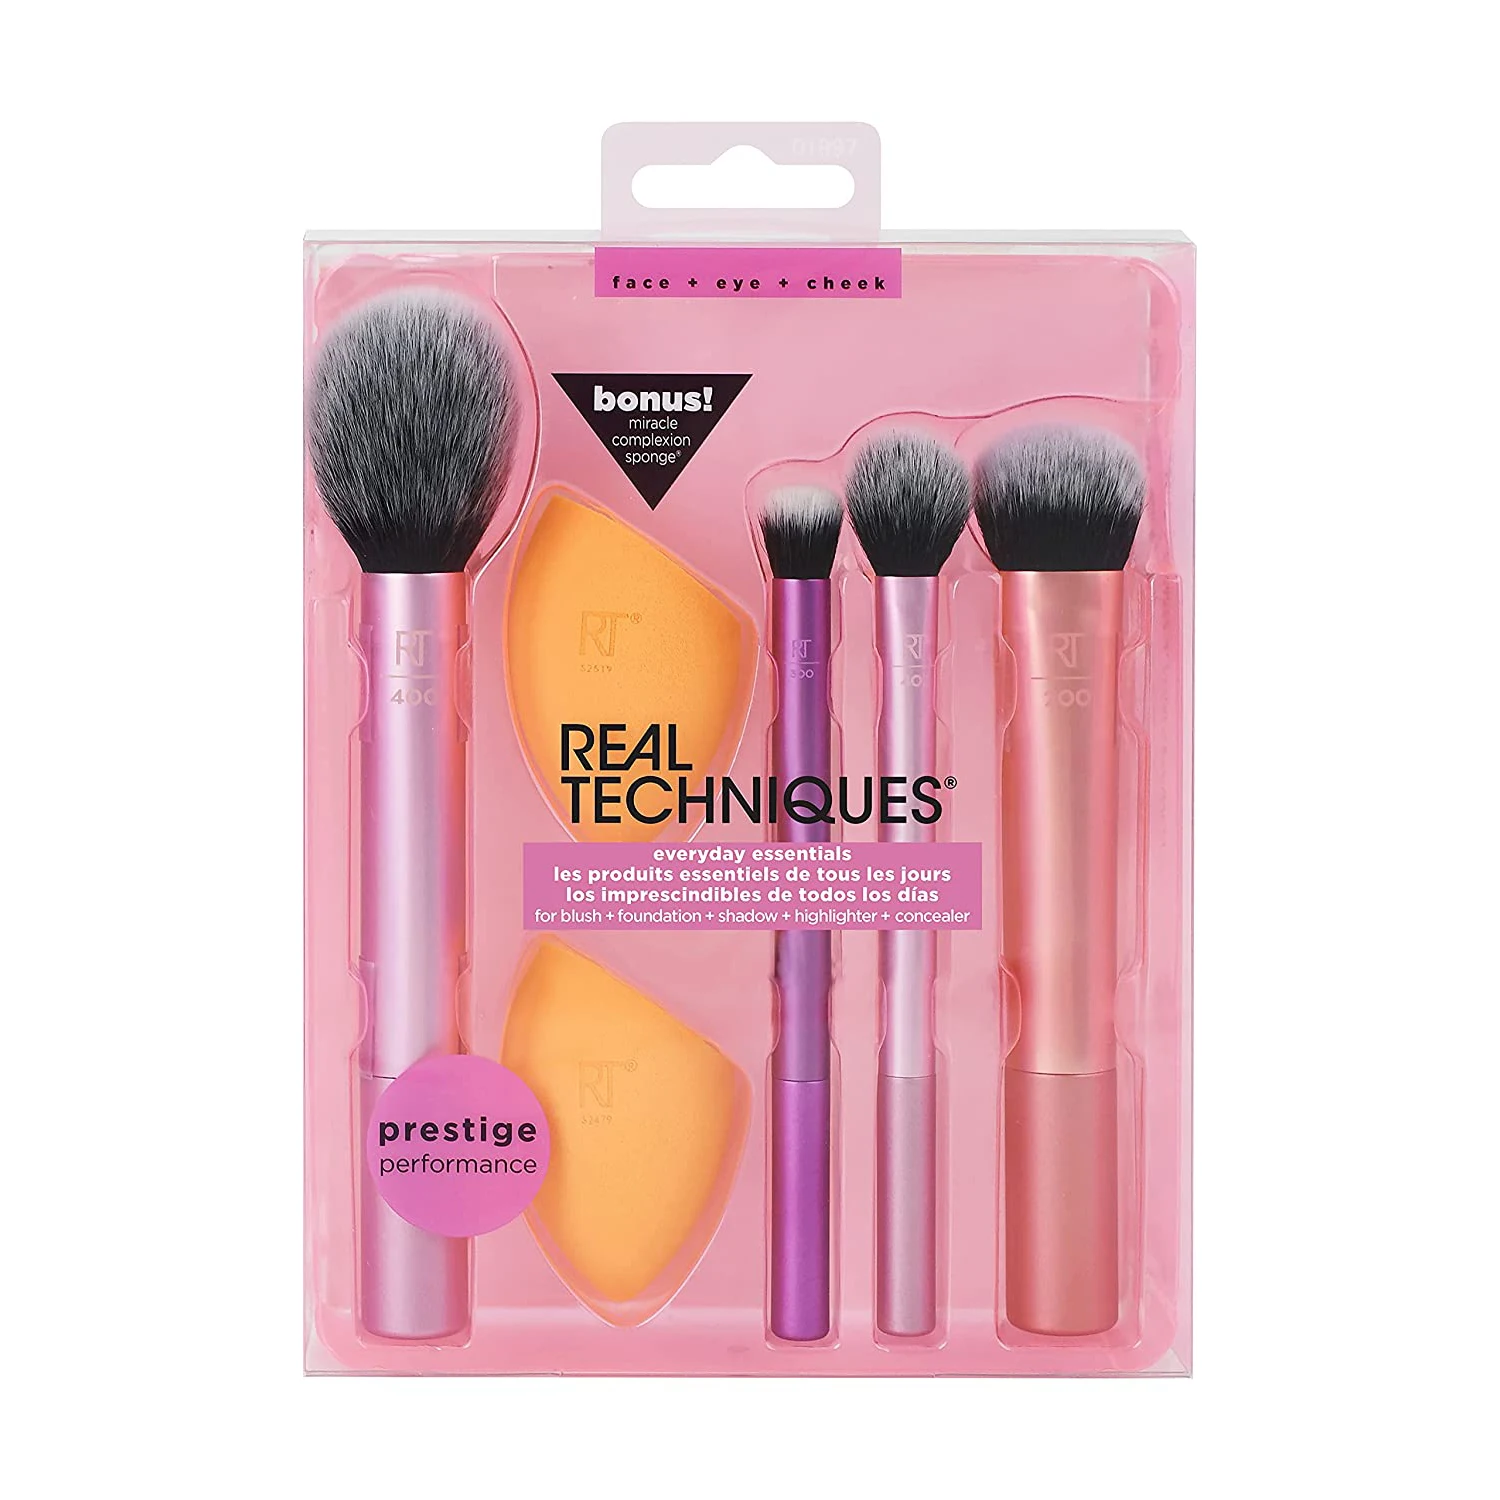 

RT 1997 Makeup Brushes 6Pcs Set Powder Foundation Eyeshadow Eyeliner Blush Blending Makeup Brush Beauty Tools Brochas maquillaje